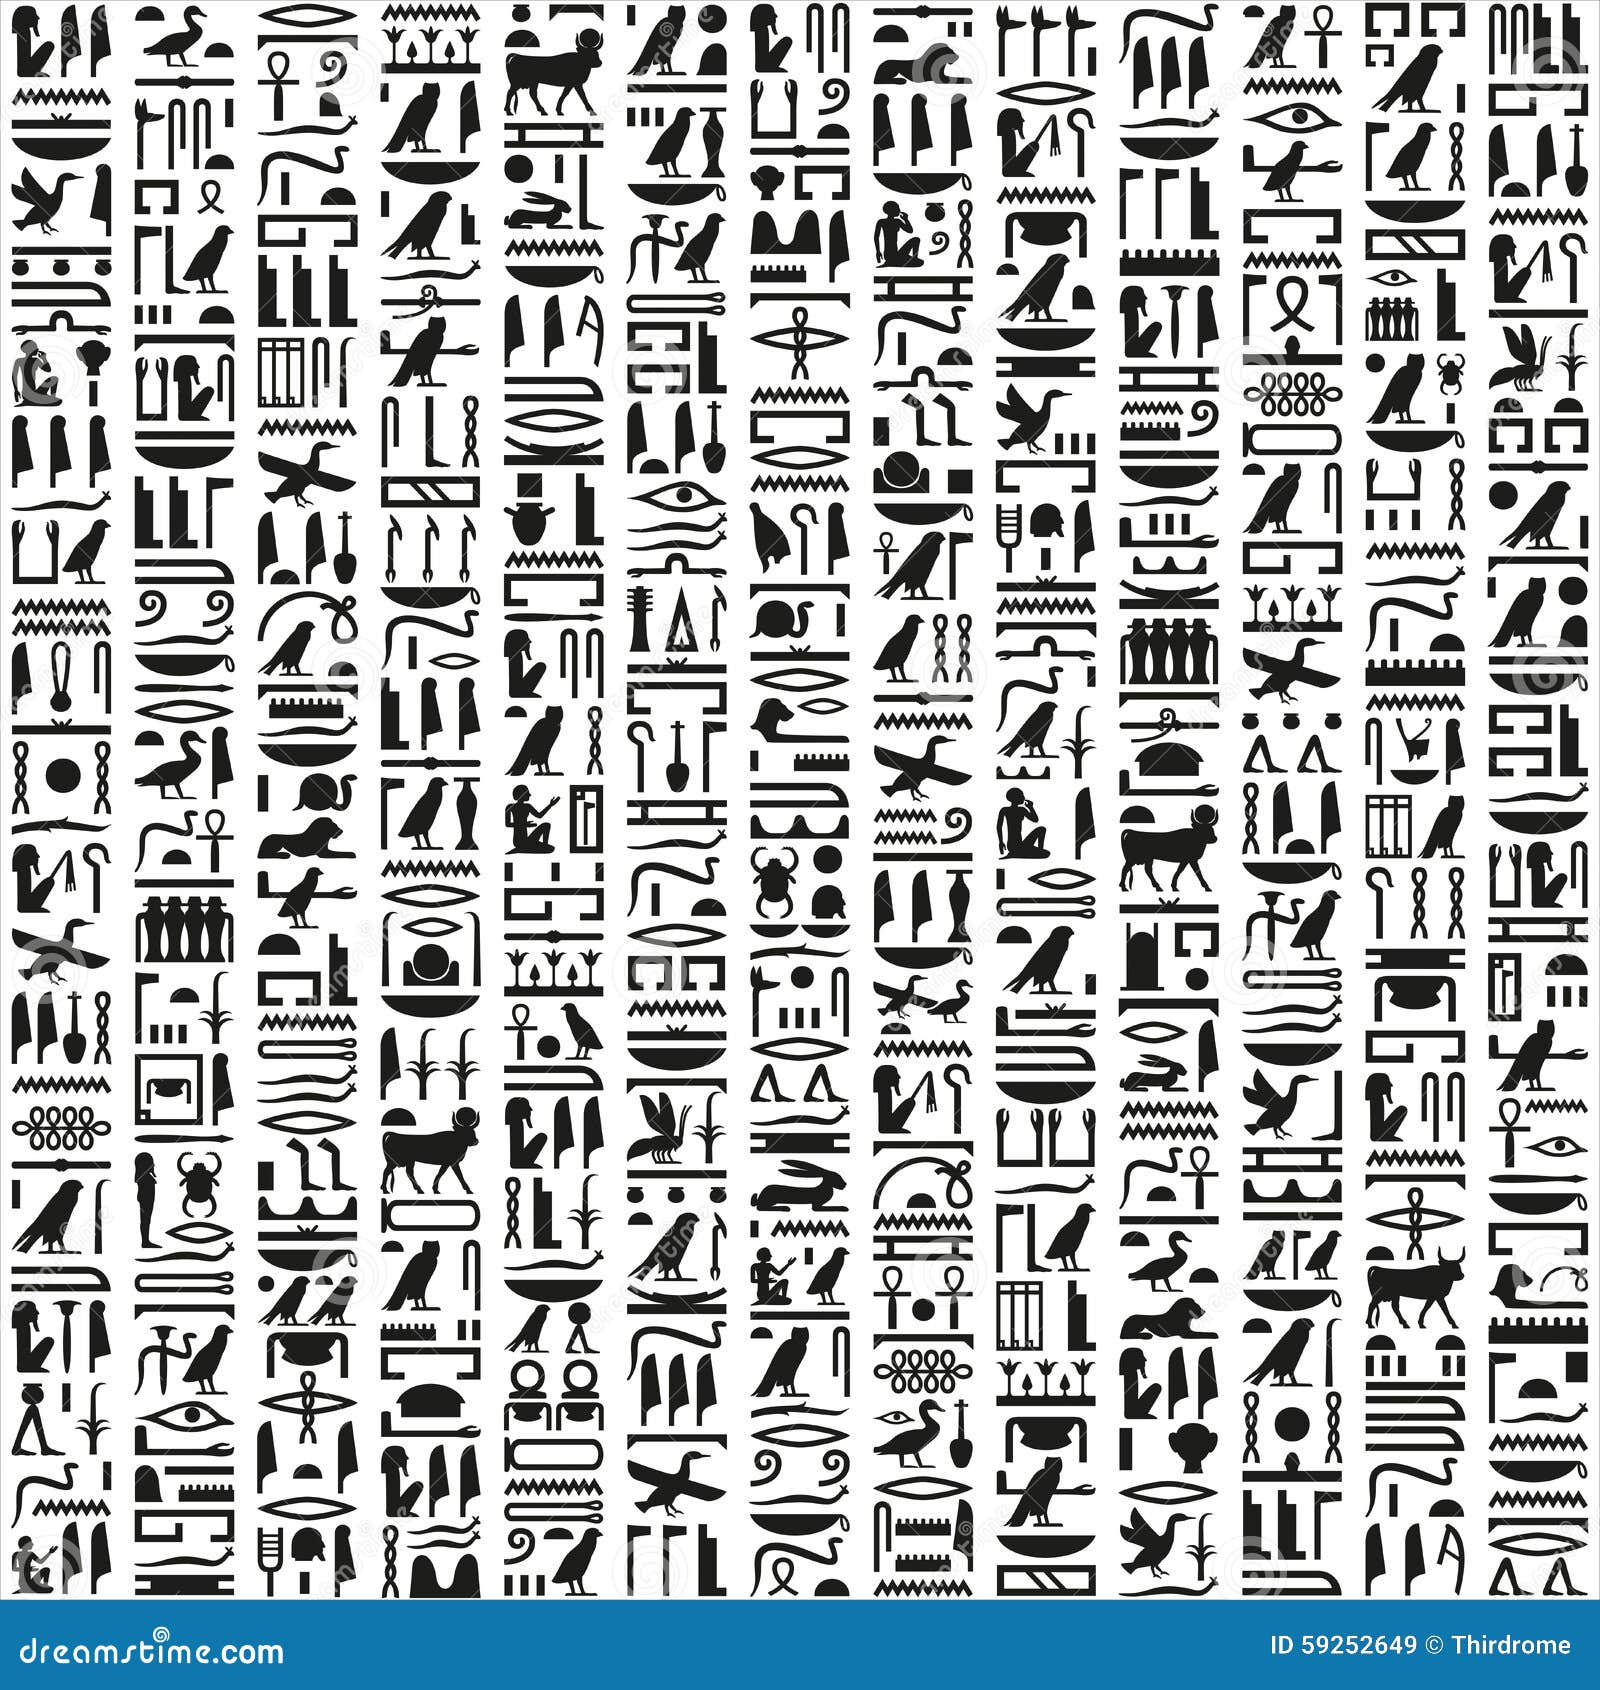 ancient egyptian hieroglyphic writing